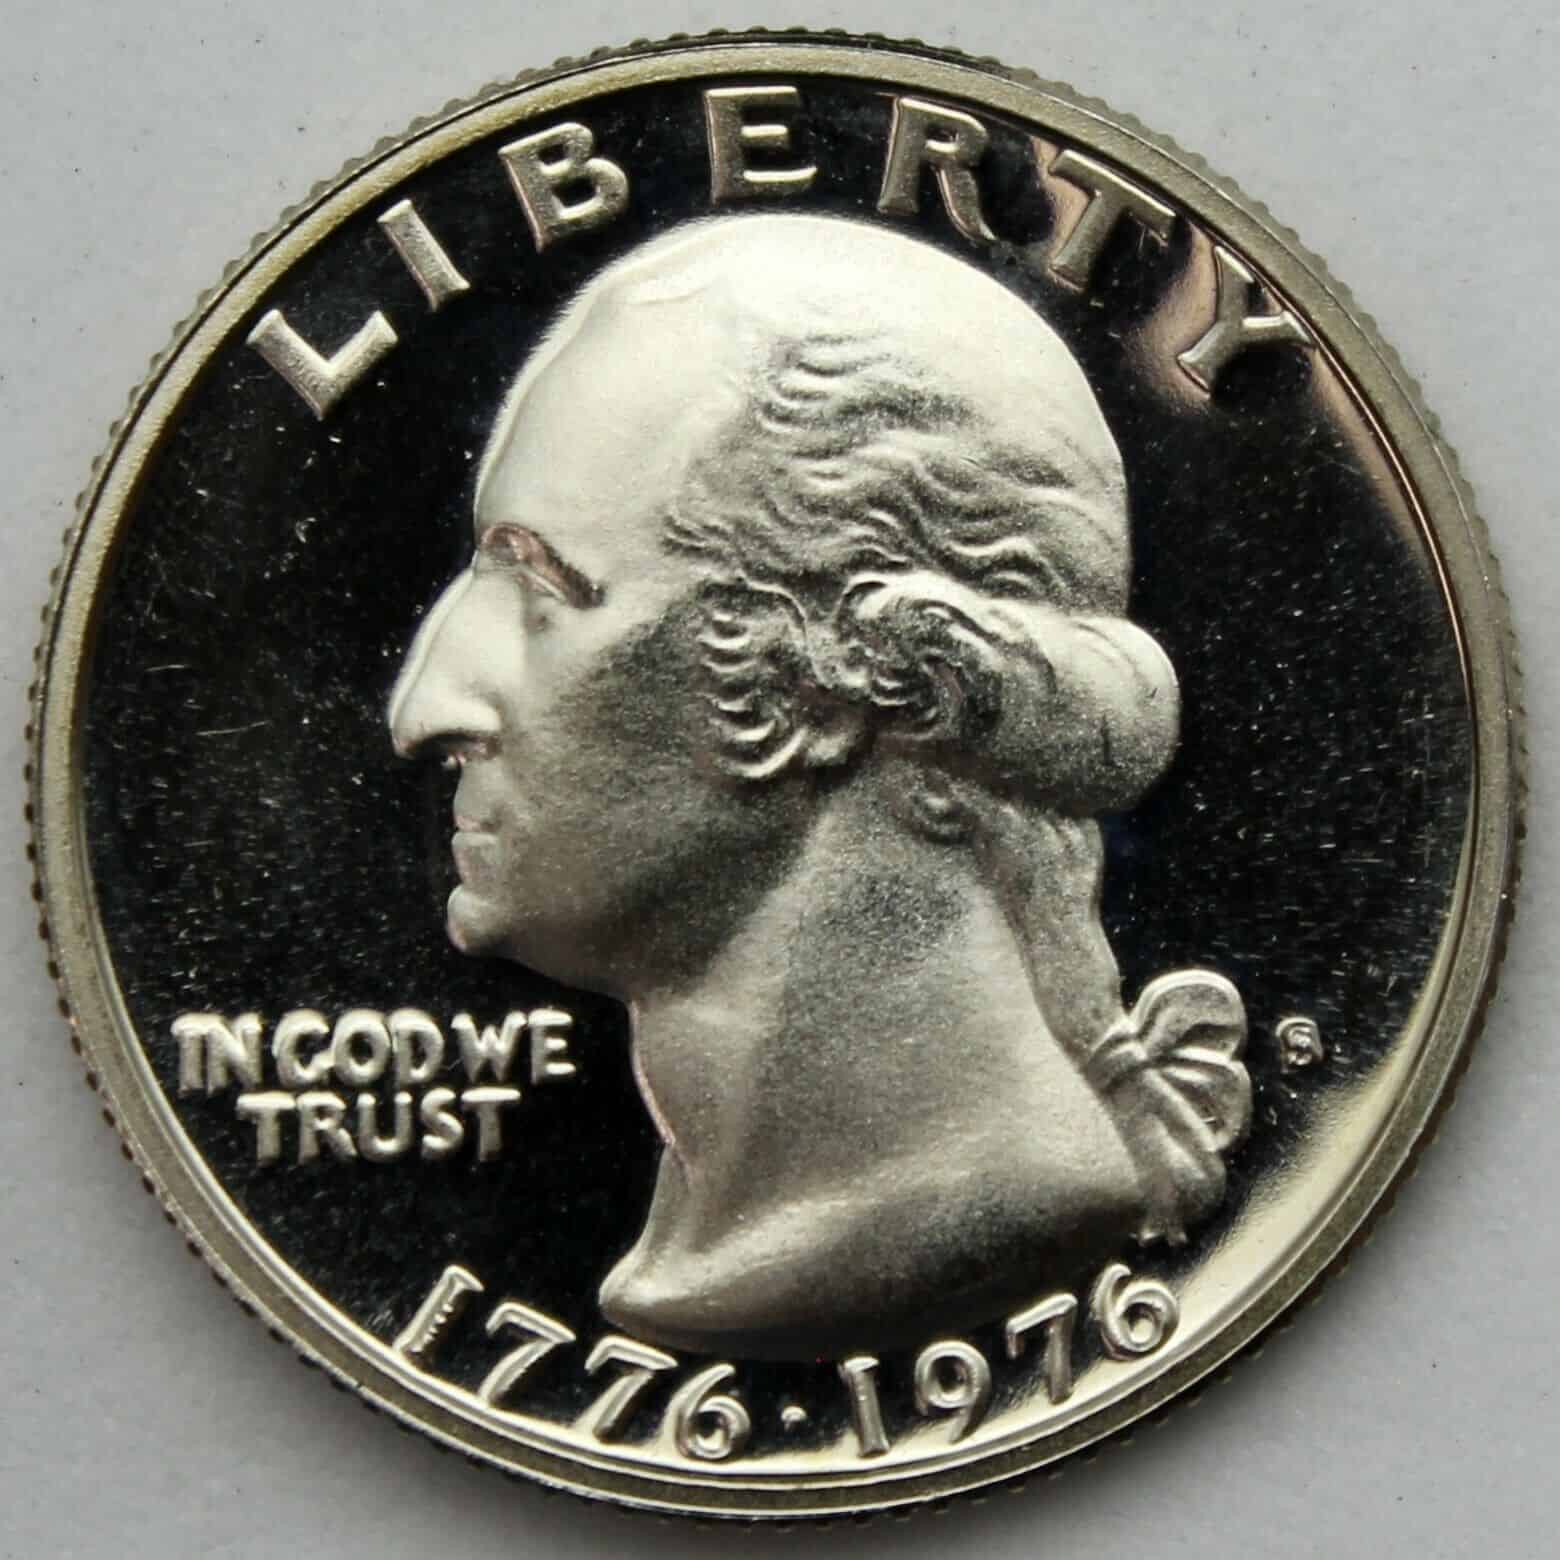 1776-1976 S proof Washington quarter (40% silver clad)